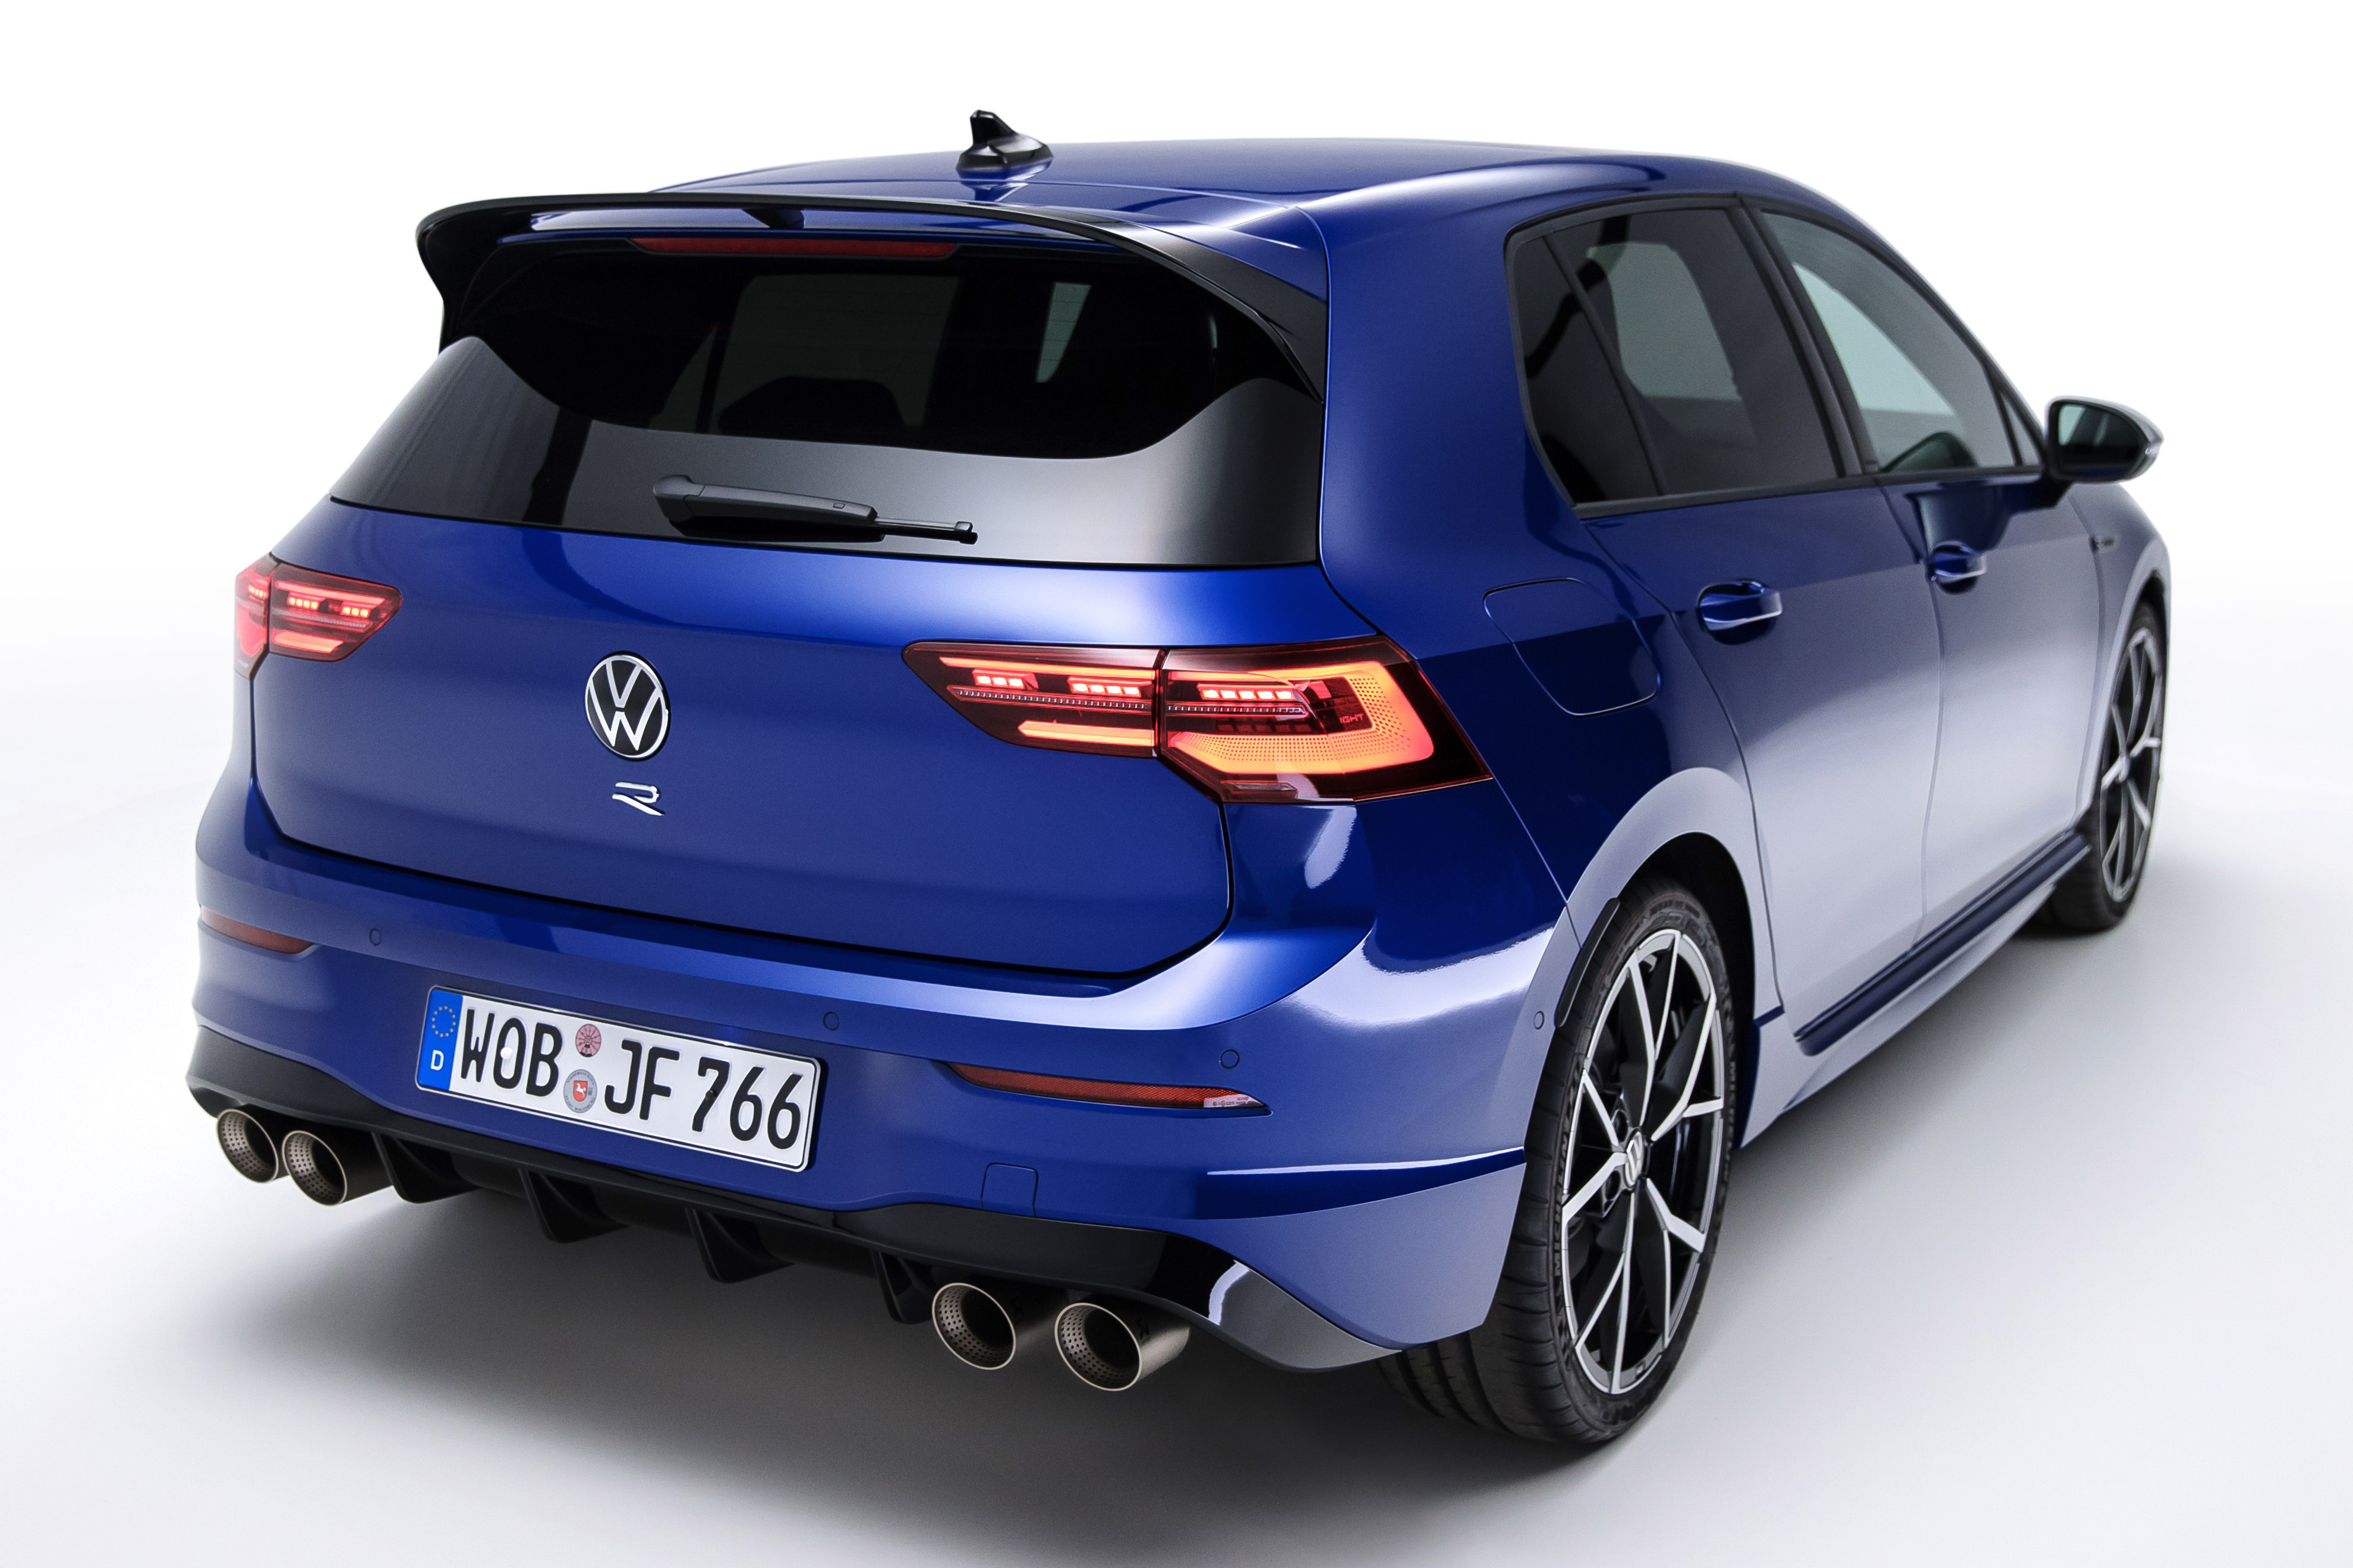 Volkswagen Golf R Mk8 didedahkan 2.0 liter turbo berkuasa 320 PS/400